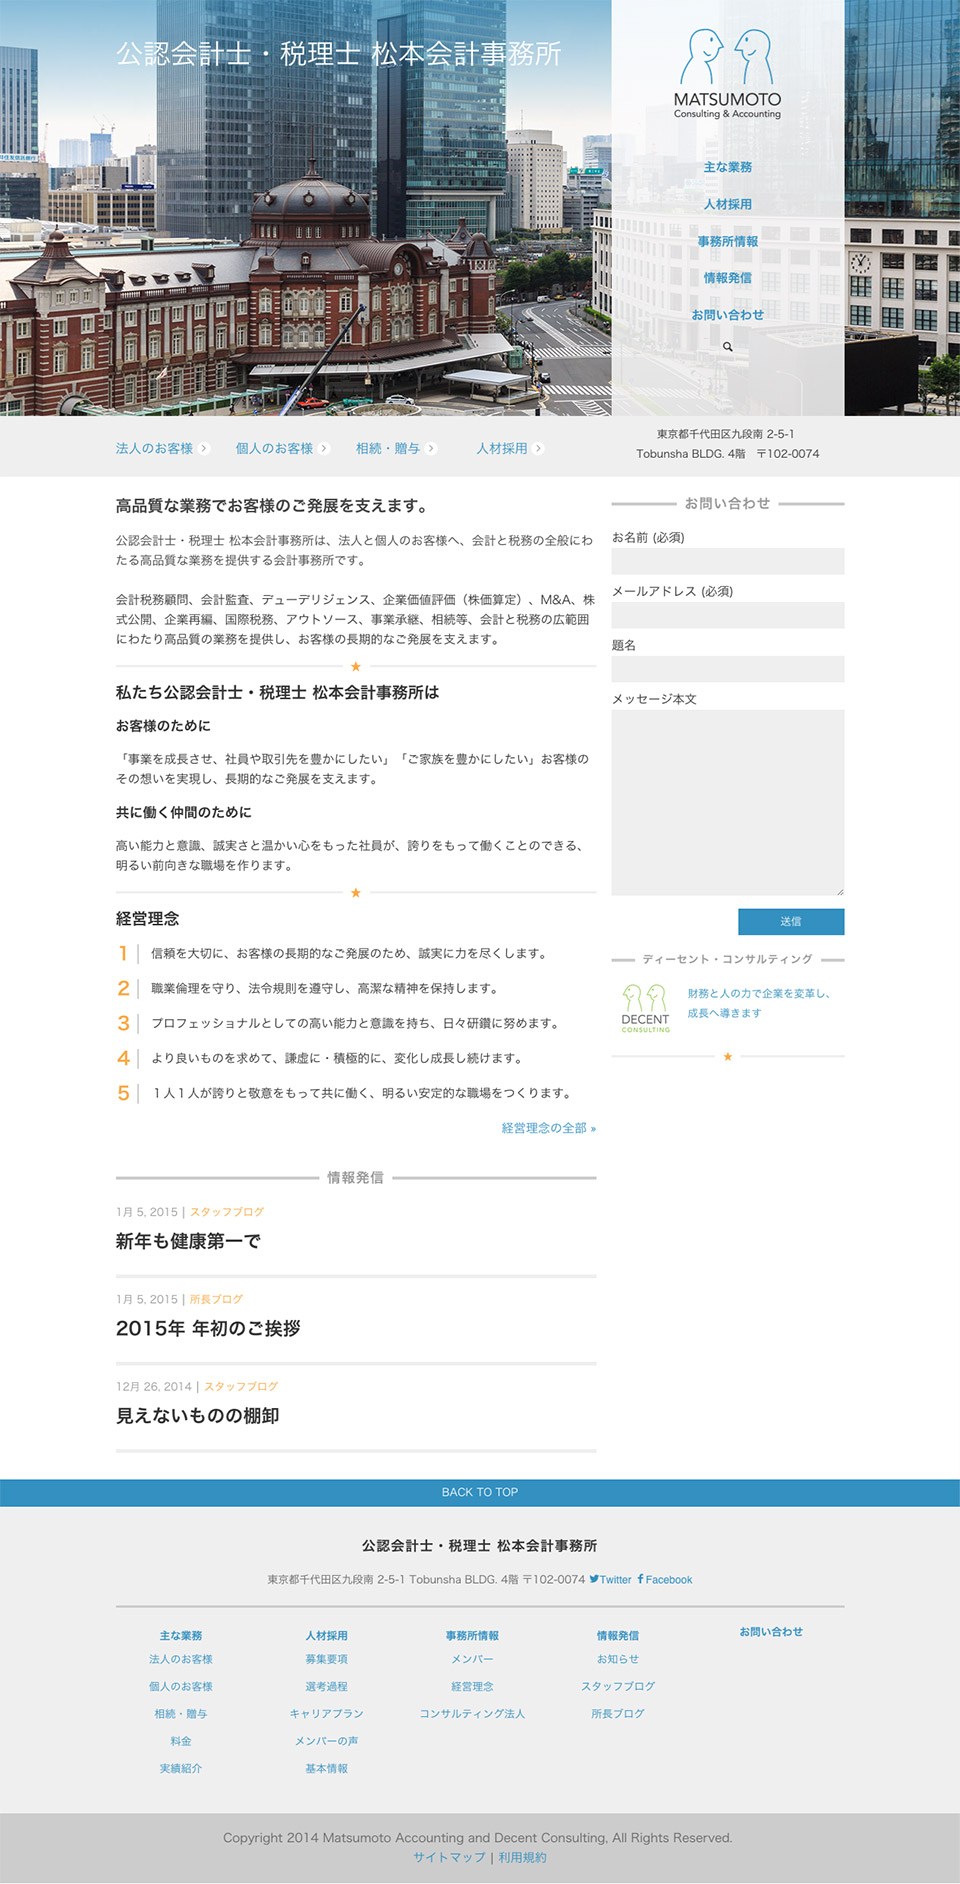 Matsumoto Accounting & Consulting - Homepage Desktop - Full Page - Menu Active